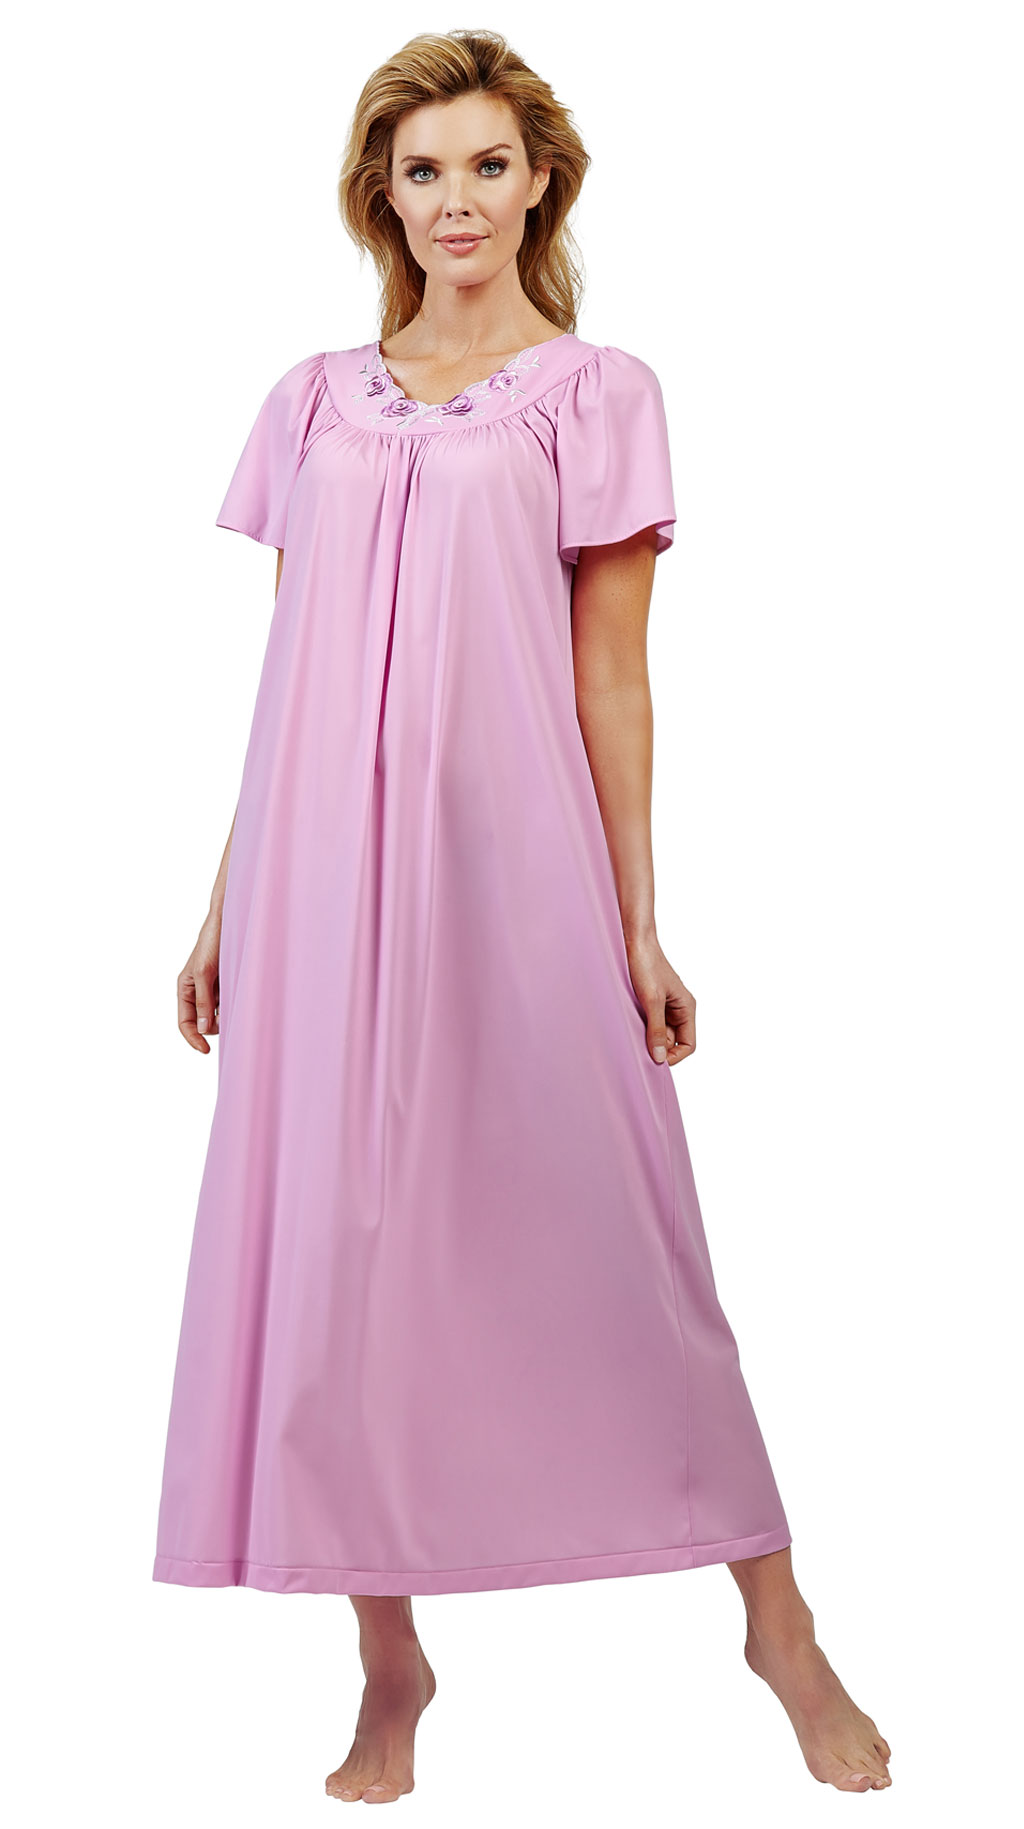 Womens Long Sleeve Nightgowns : Women's Long Cap Sleeve Nightgown ...